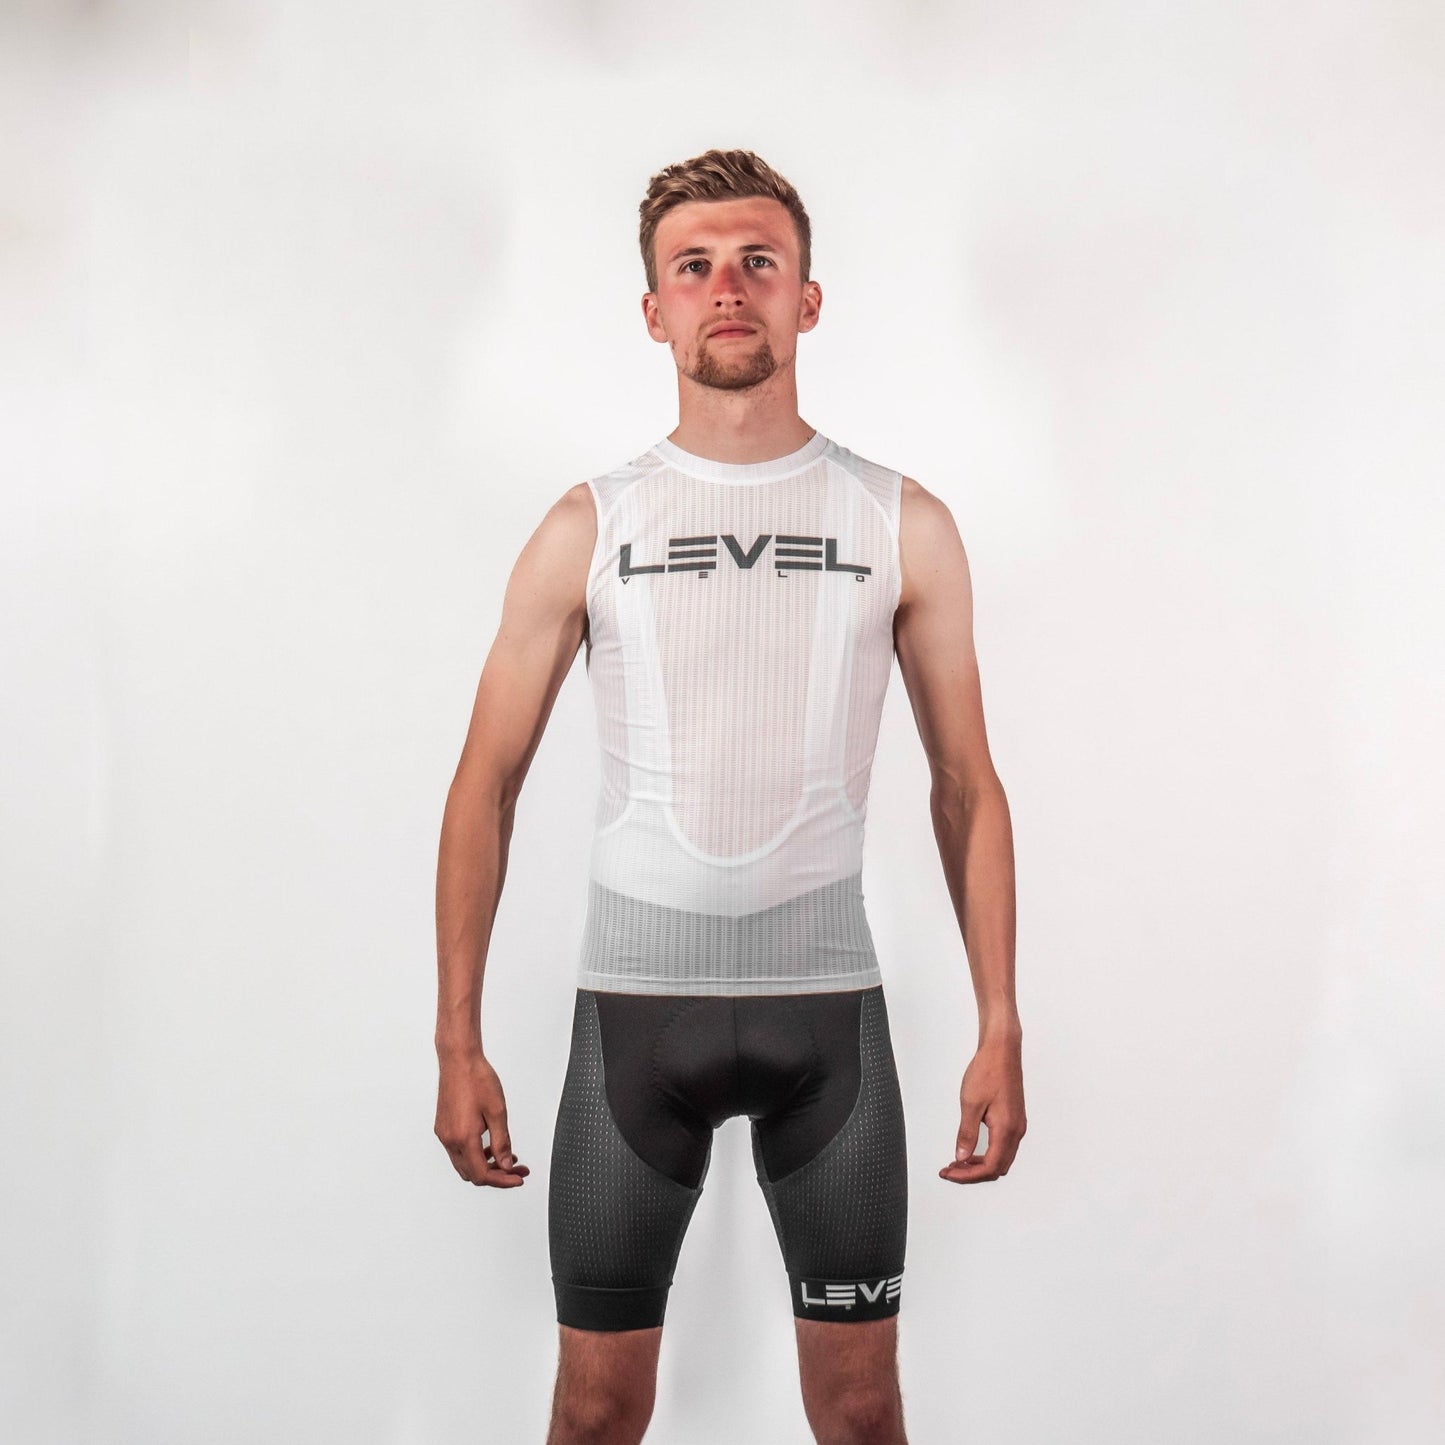 Endurance Sport by Alex Coh Elite vest & Base layer - LEVEL VELO